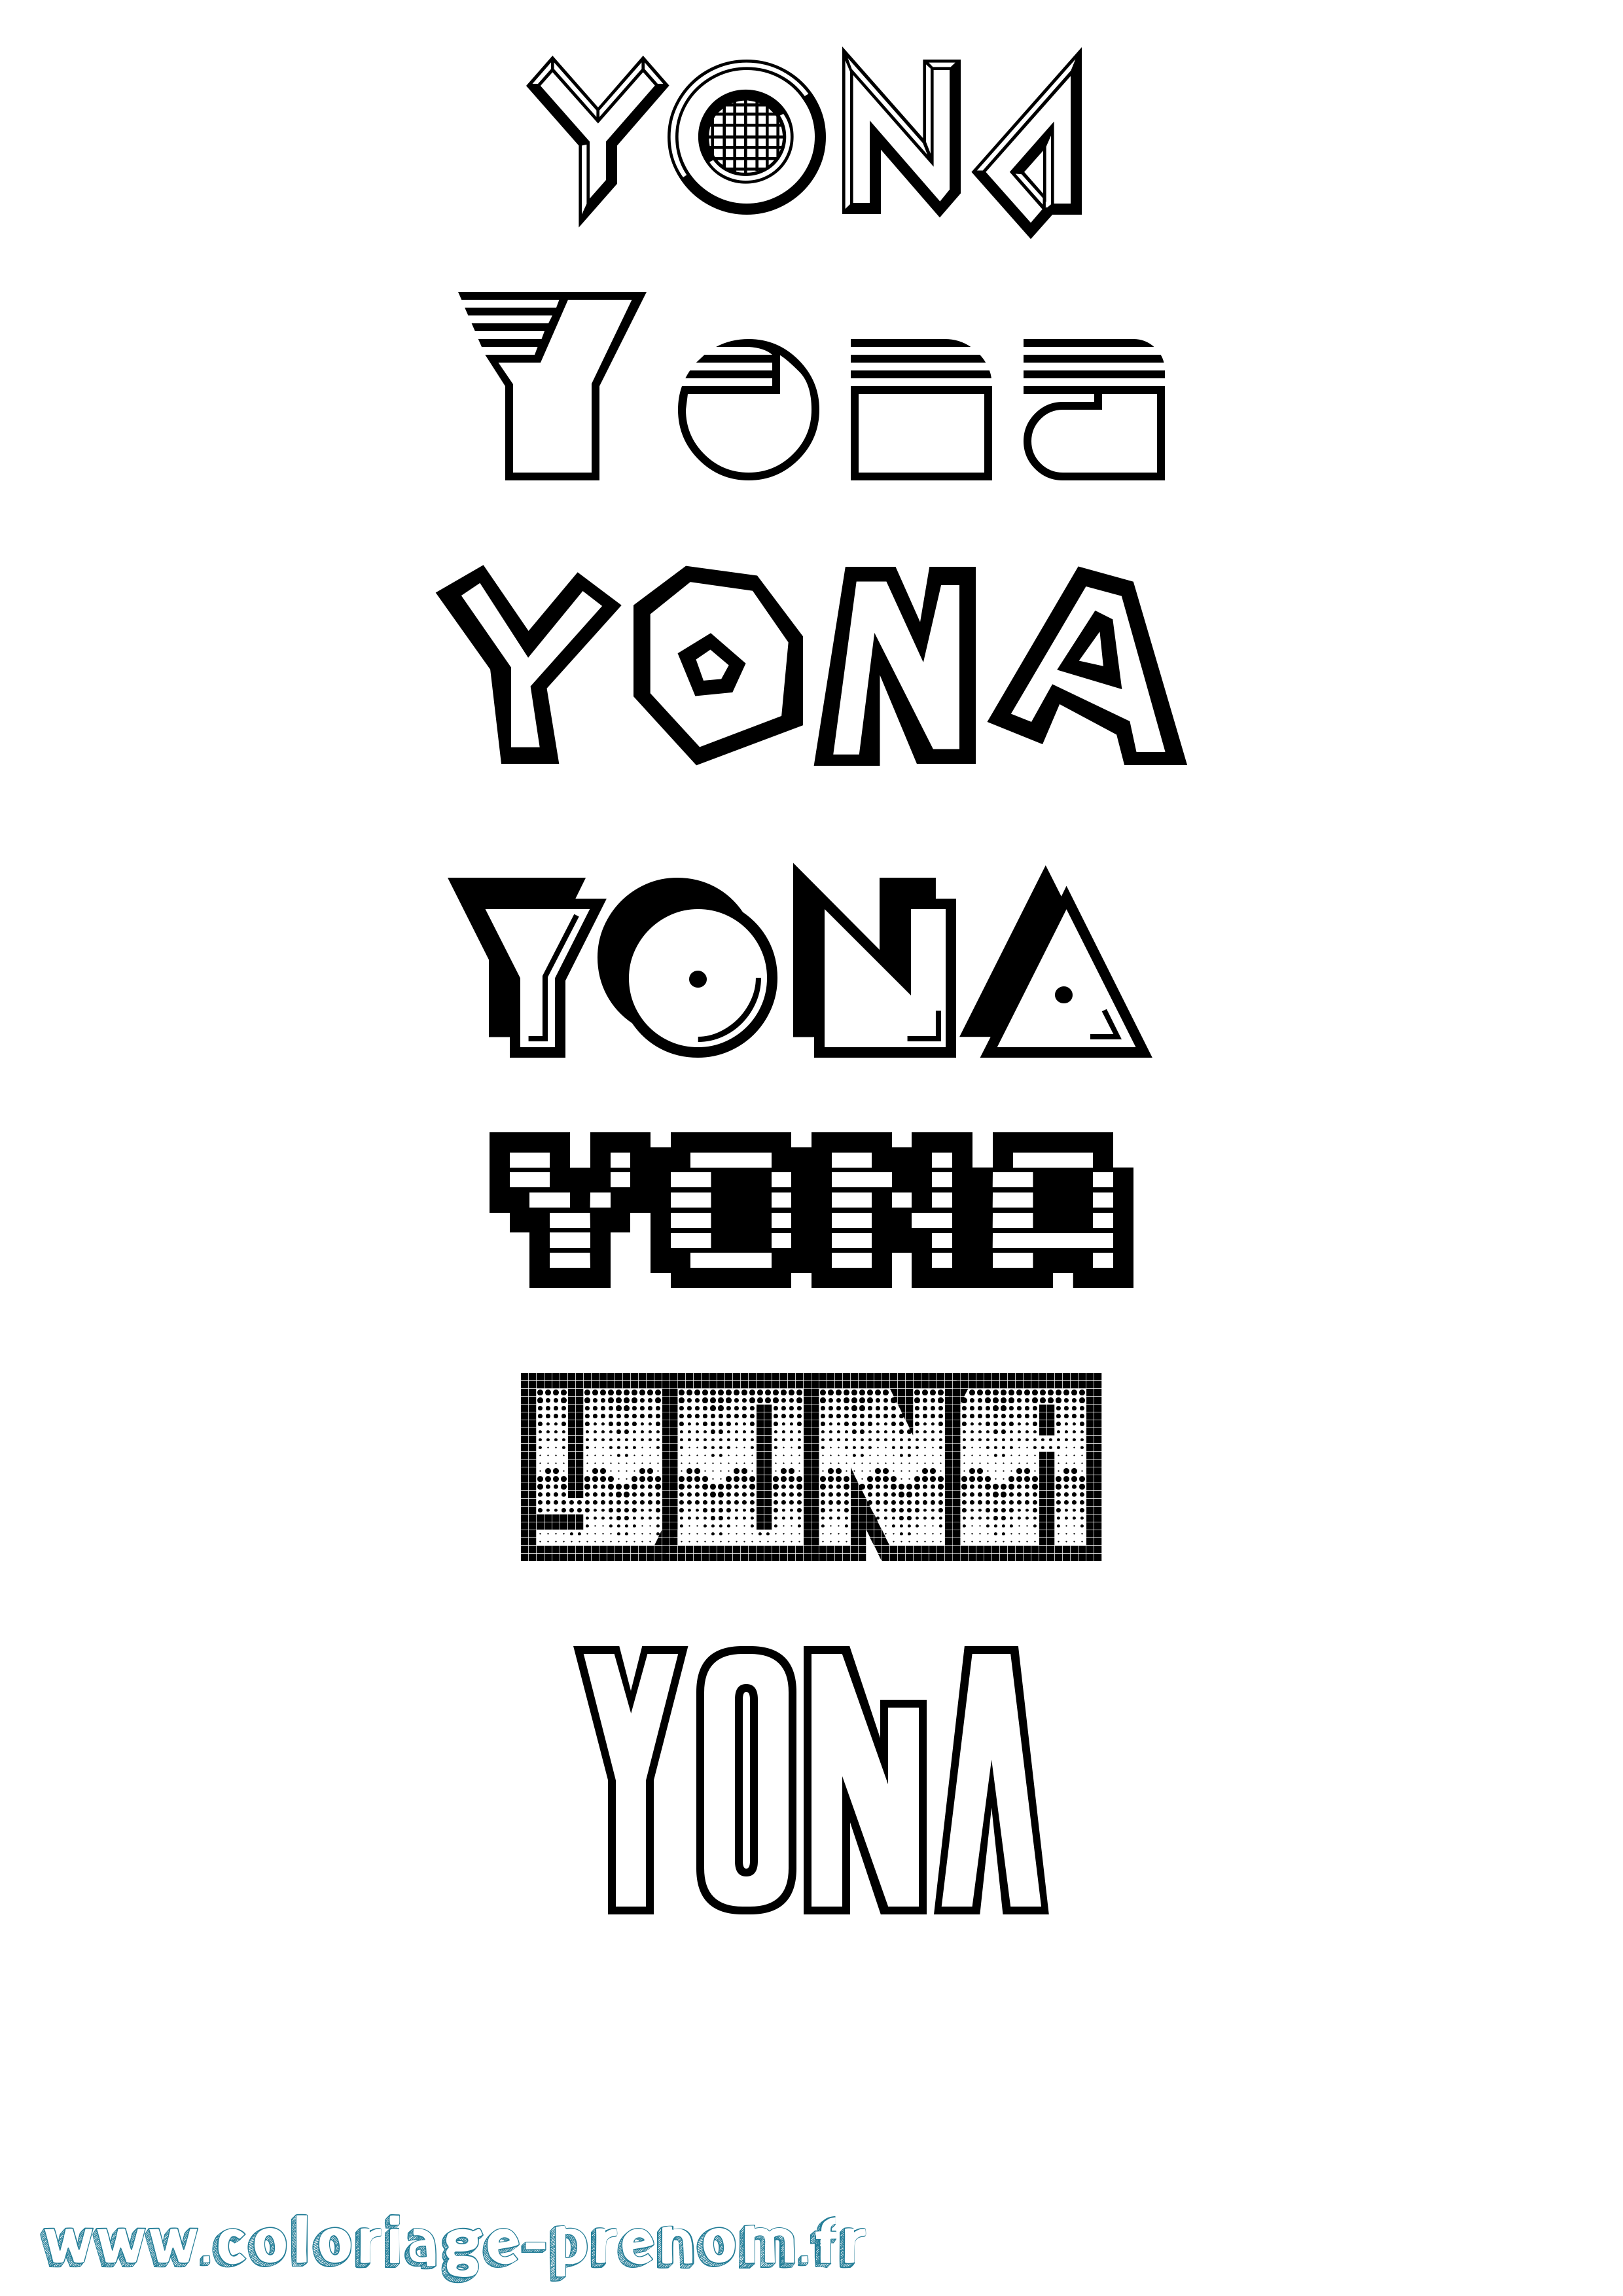 Coloriage prénom Yona